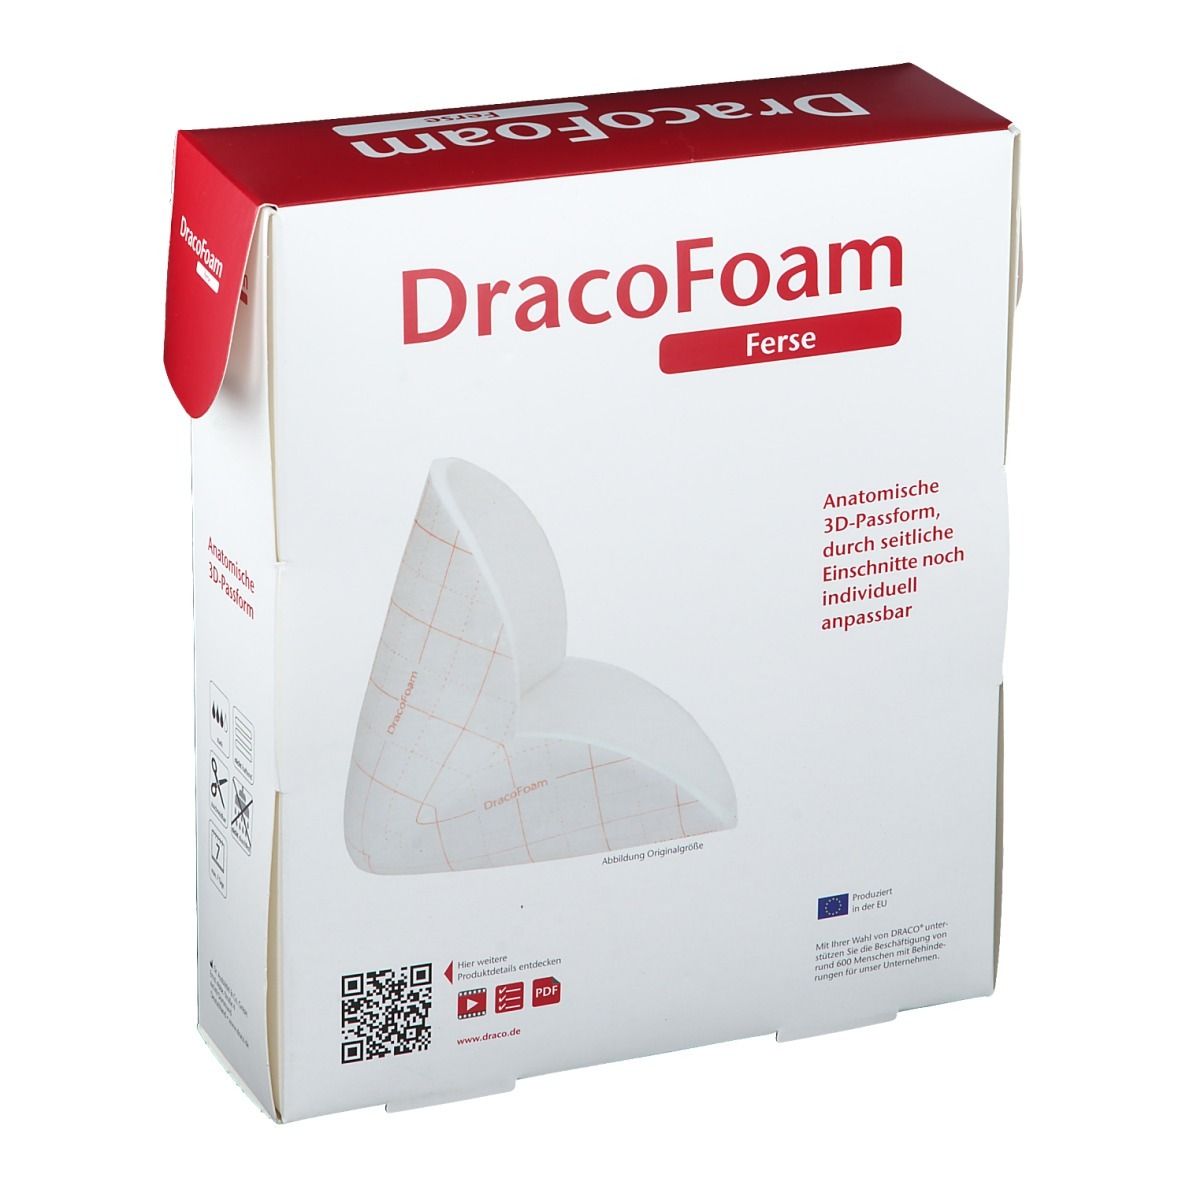 DracoFoam Ferse